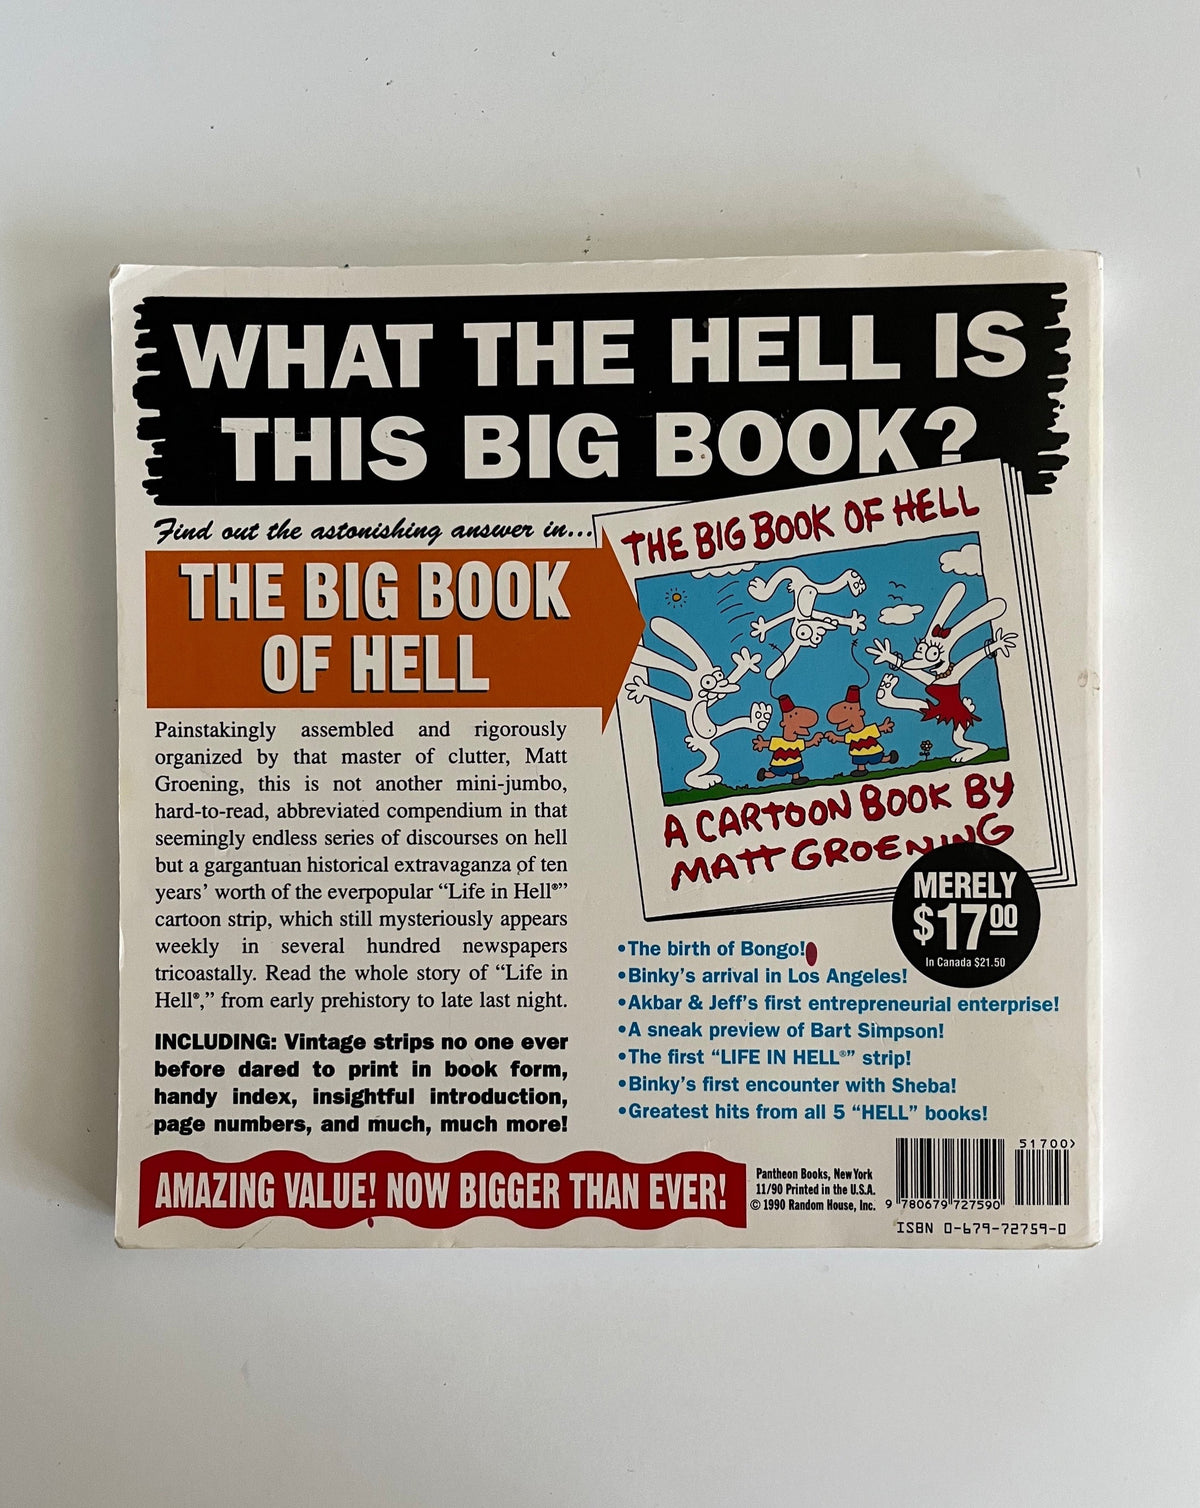 The Big Book of Hell by Matt Groening